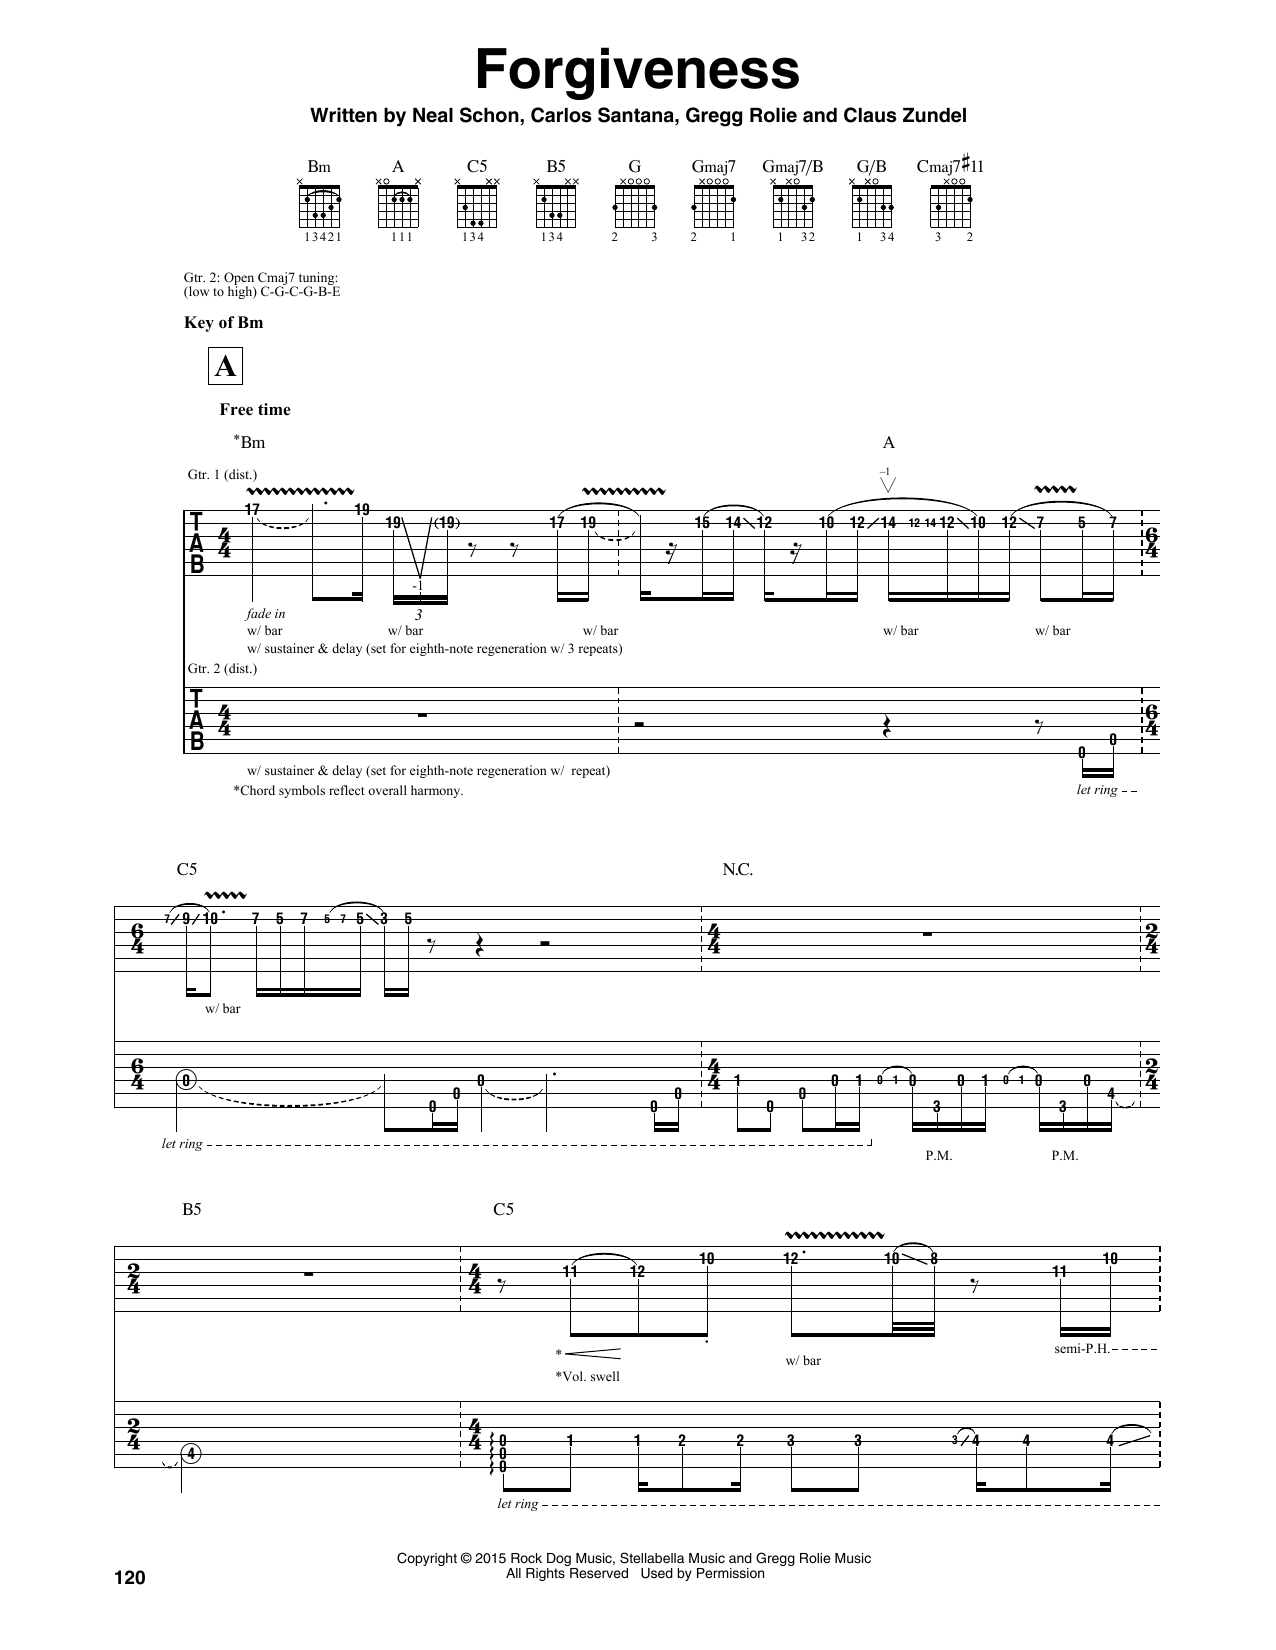 Santana Forgiveness Sheet Music Notes & Chords for Guitar Tab - Download or Print PDF